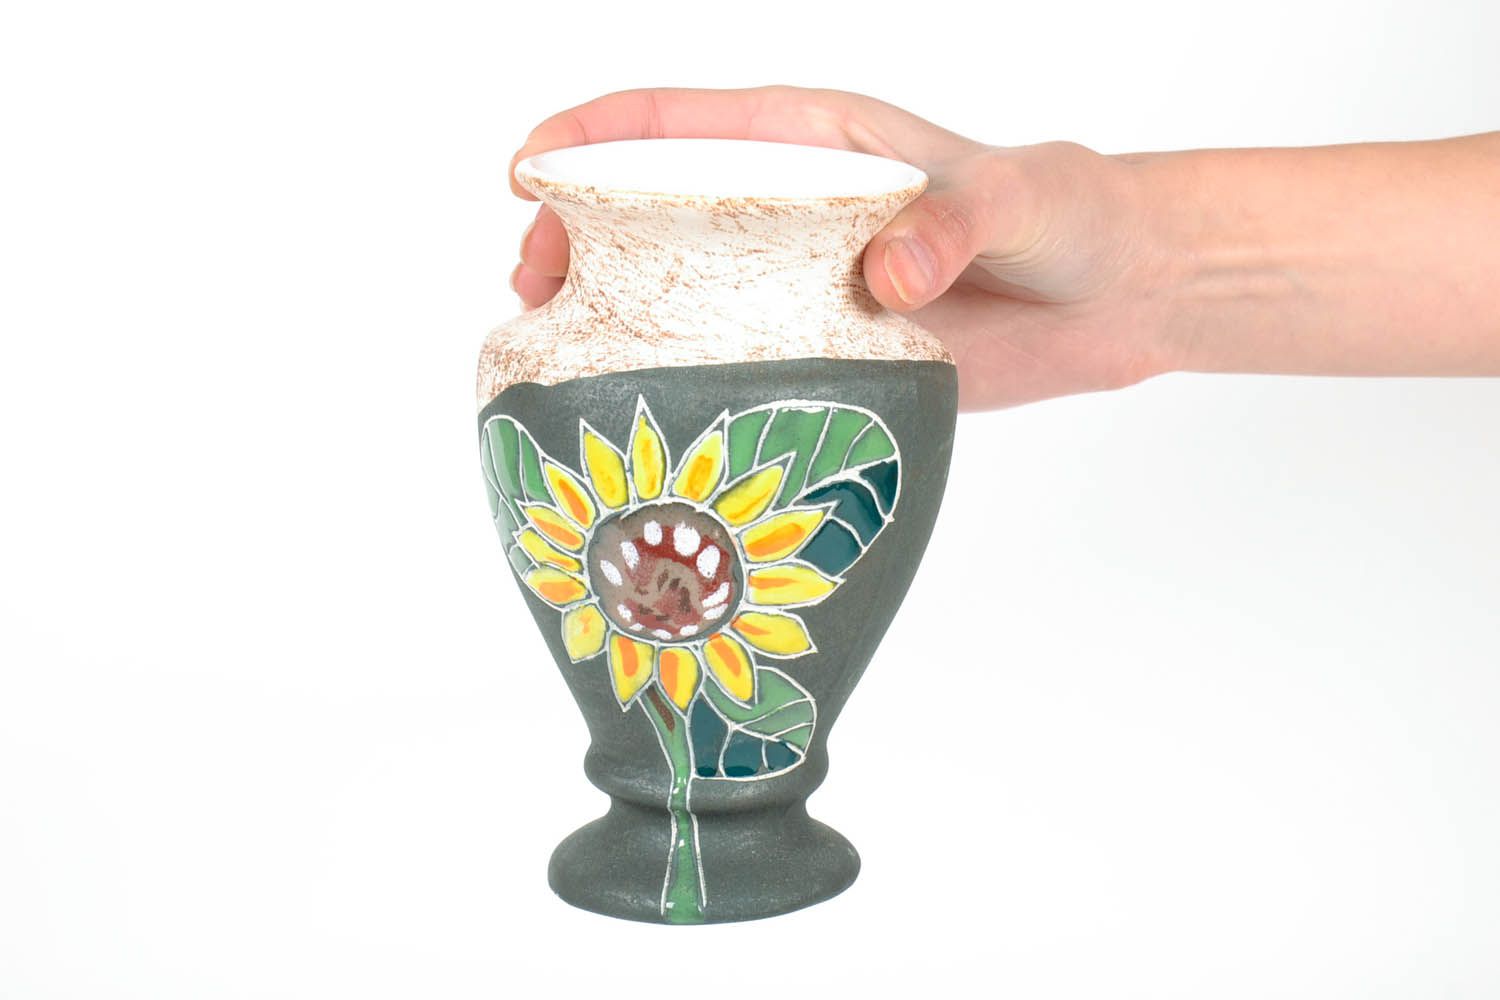 Vase 6-inch tall ceramic vase décor for flowers 0,87 lb photo 2